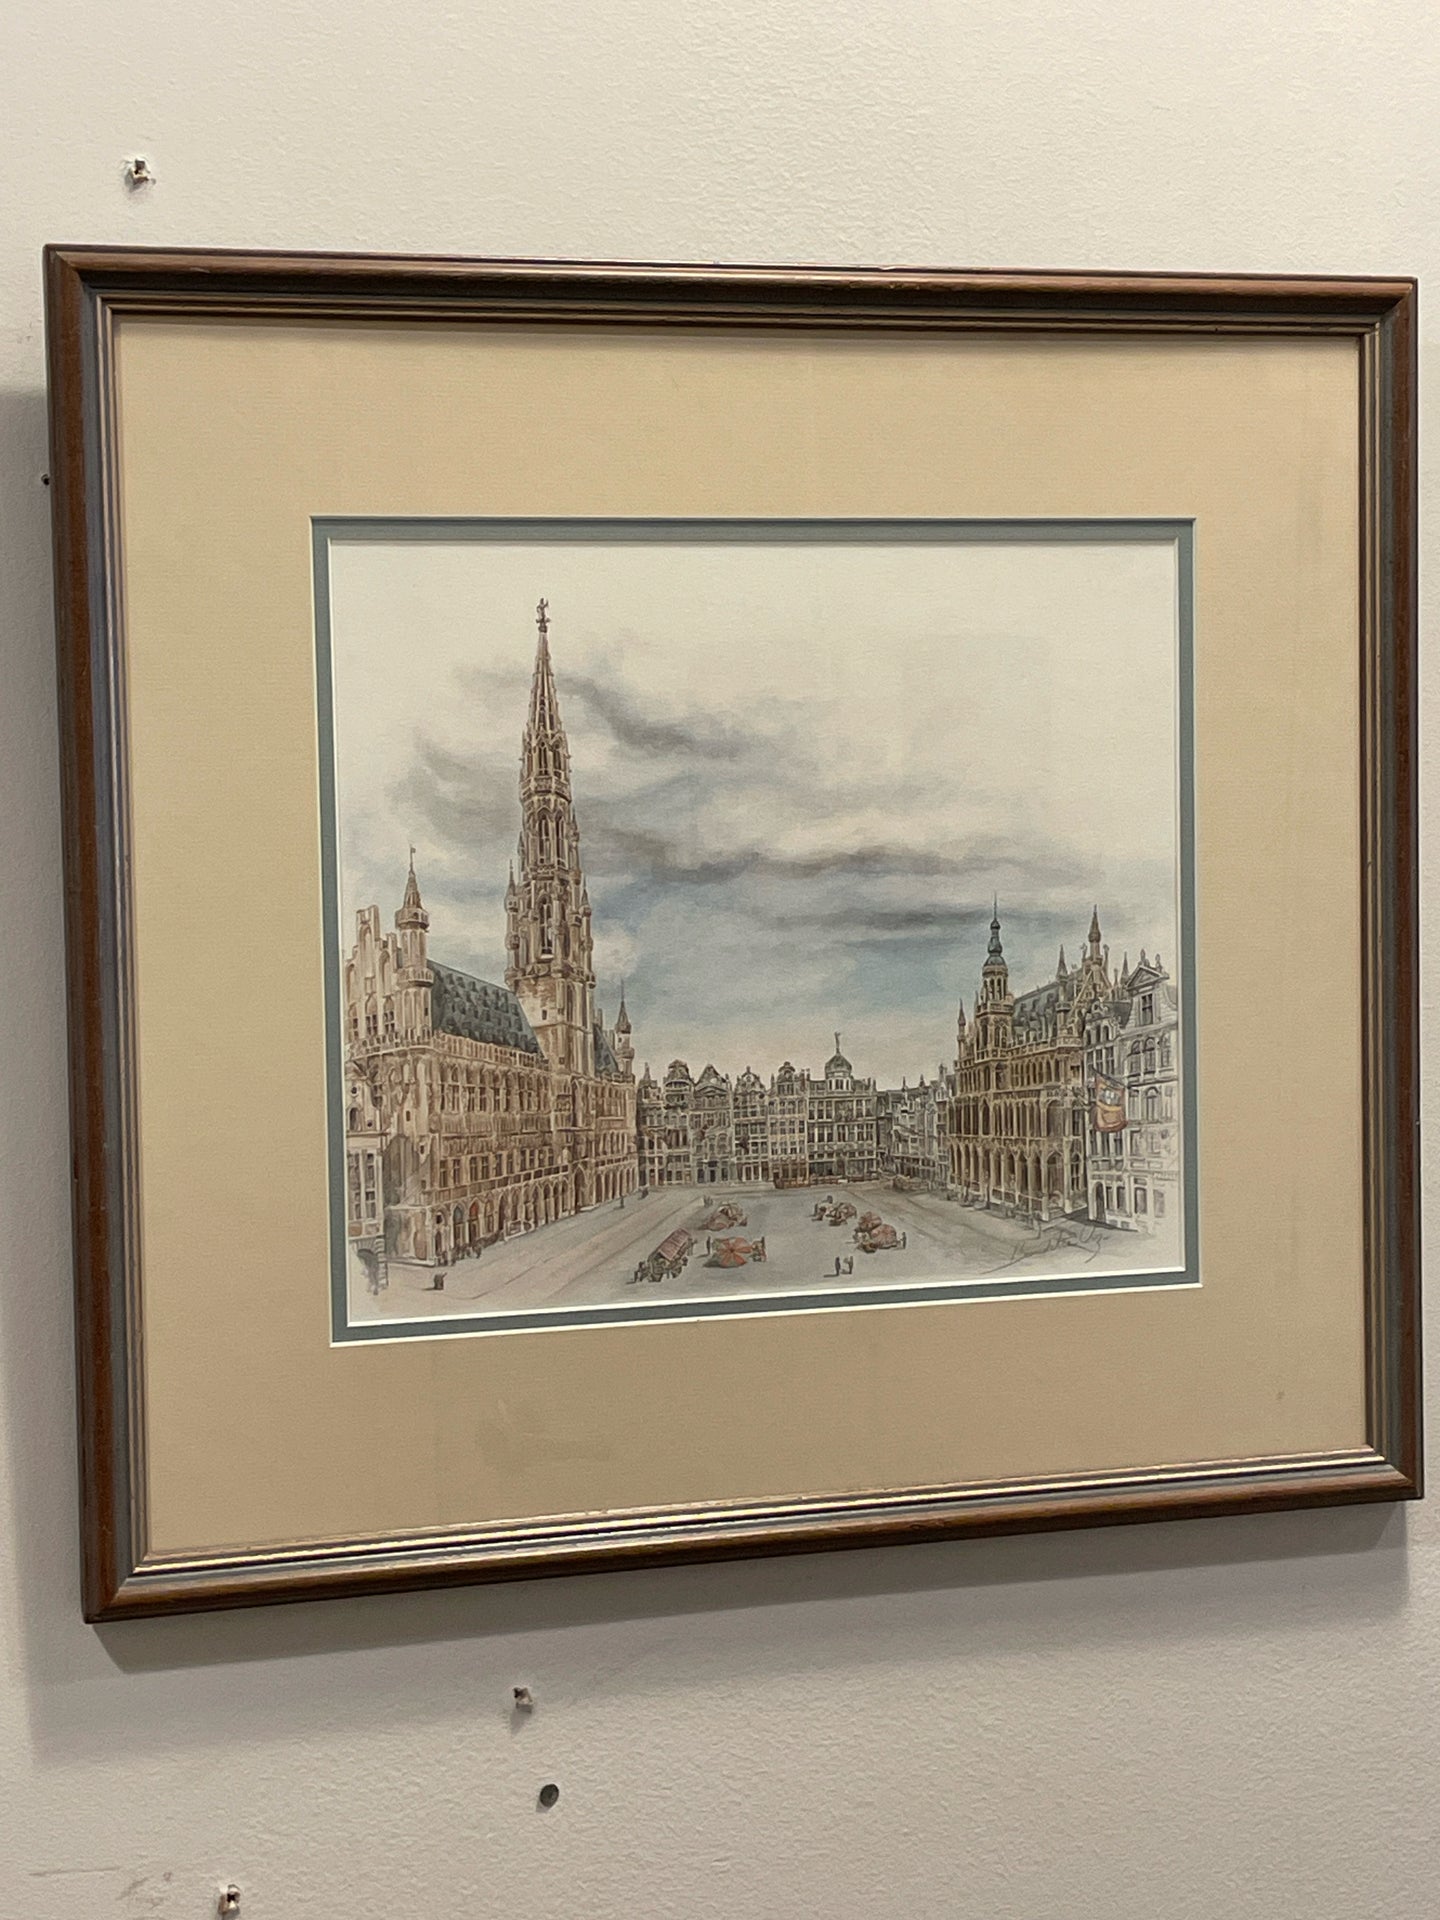 Framed Print of Grand Place in Brussels, Belgium by Bernadette Voz, signed